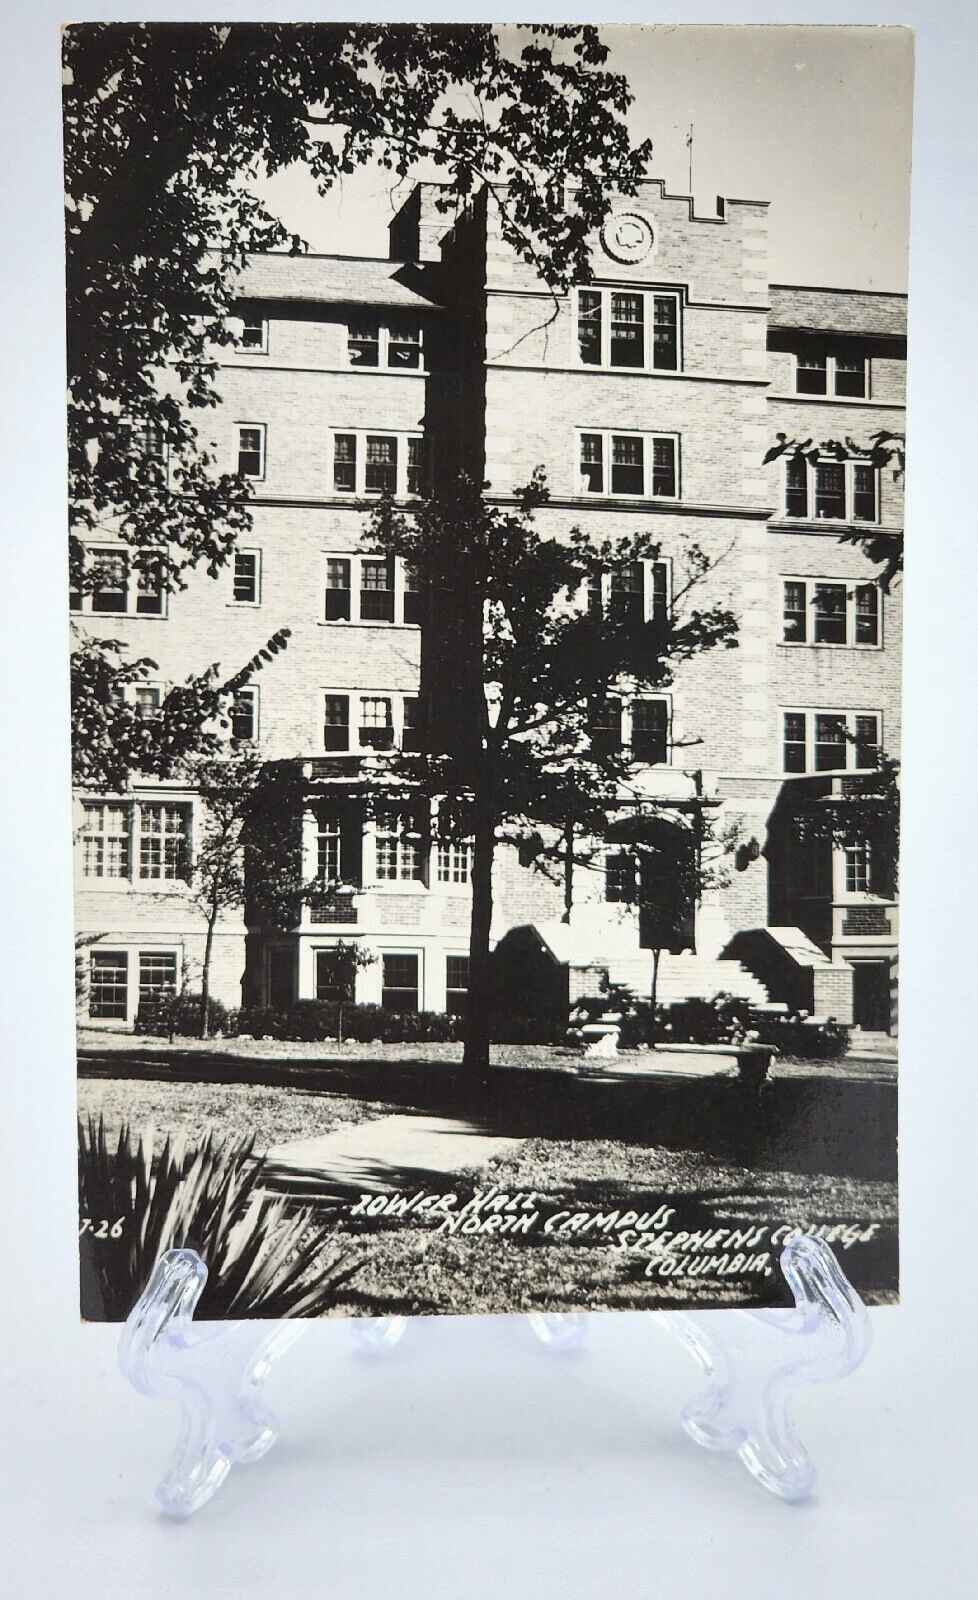 RPPC Postcard~ North Campus~ Tower Hall~ Stephens College~ Columbia, Missouri